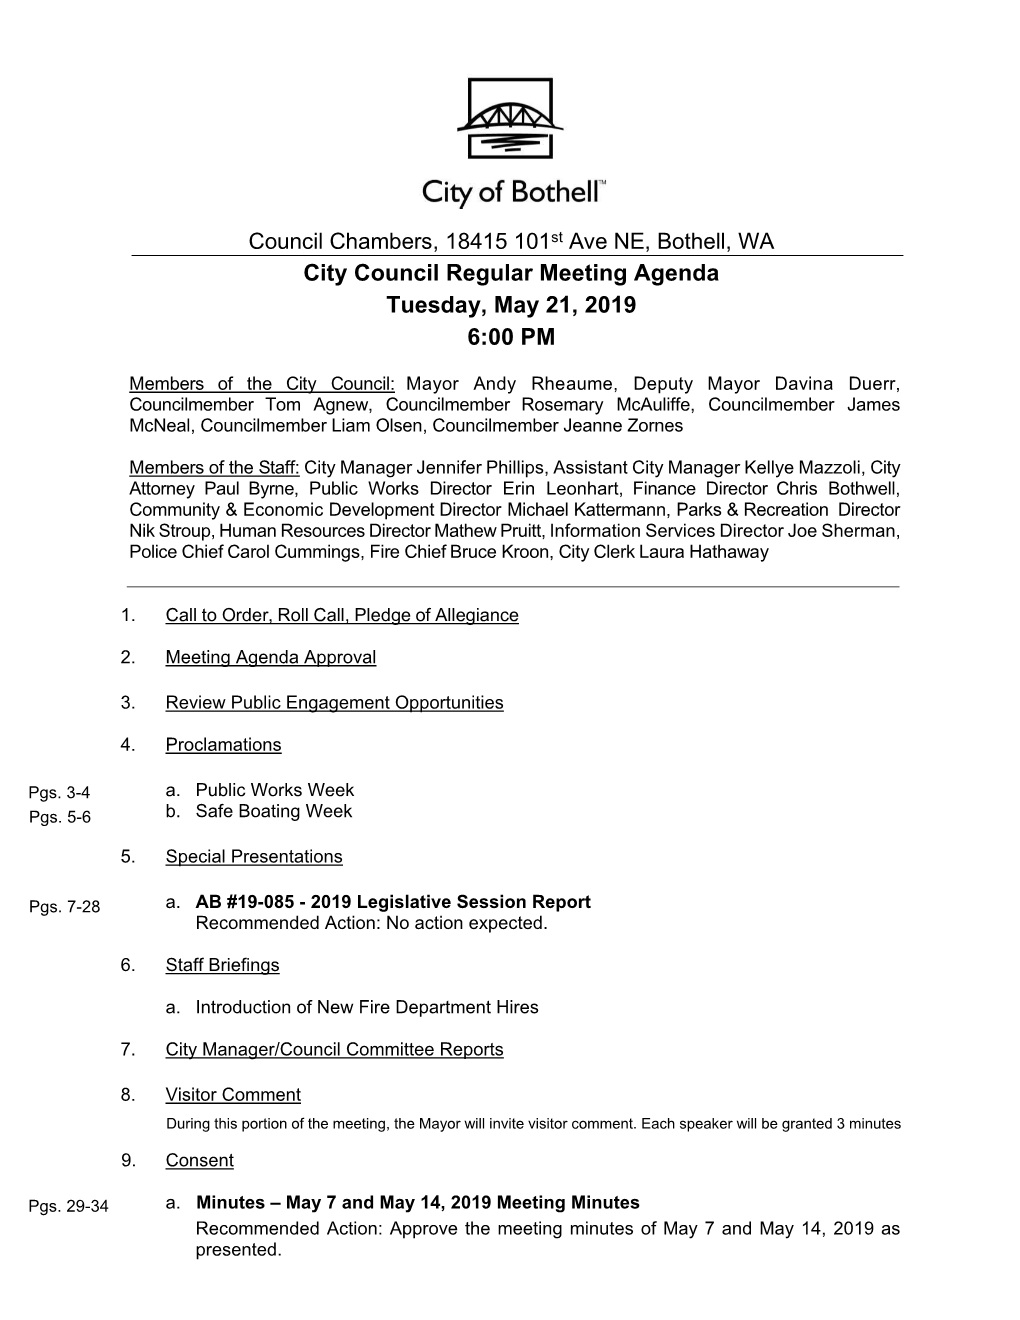 Council Chambers, 18415 101St Ave NE, Bothell, WA City Council Regular Meeting Agenda Tuesday, May 21, 2019 6:00 PM